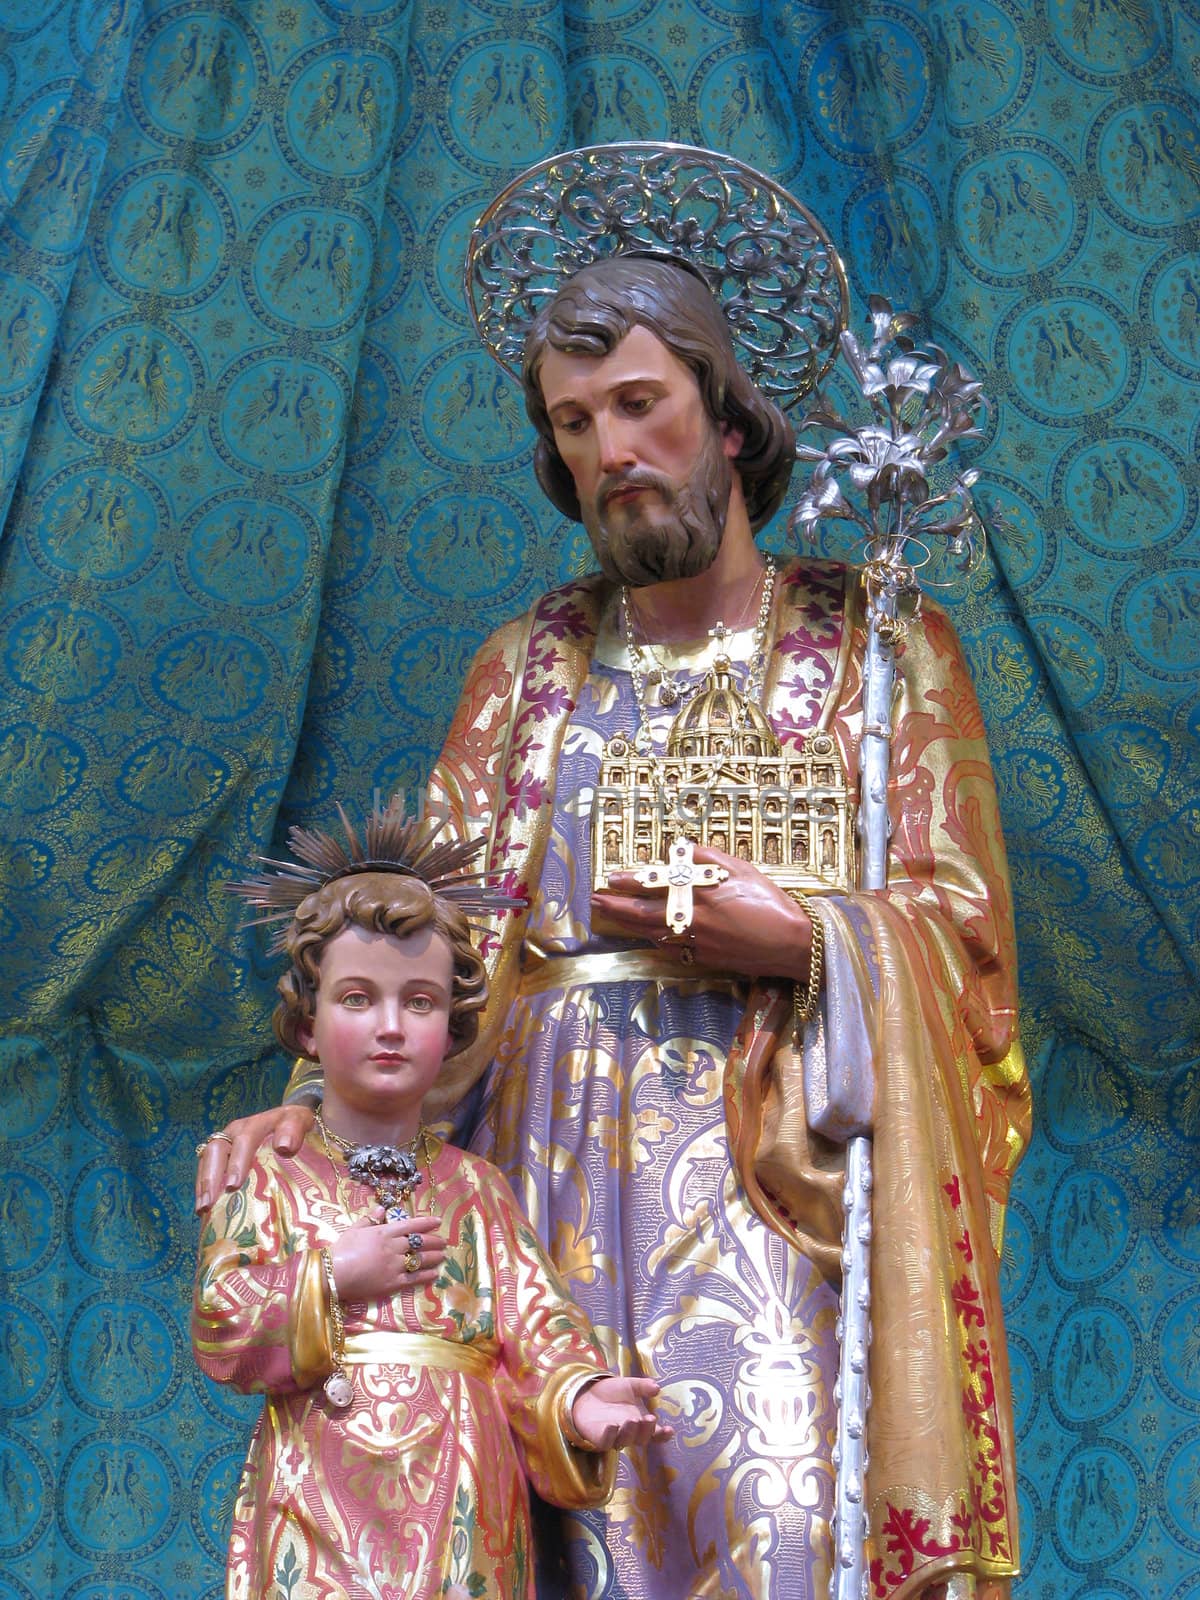 A detail of the statue of Saint Joseph in Kalkara, Malta.